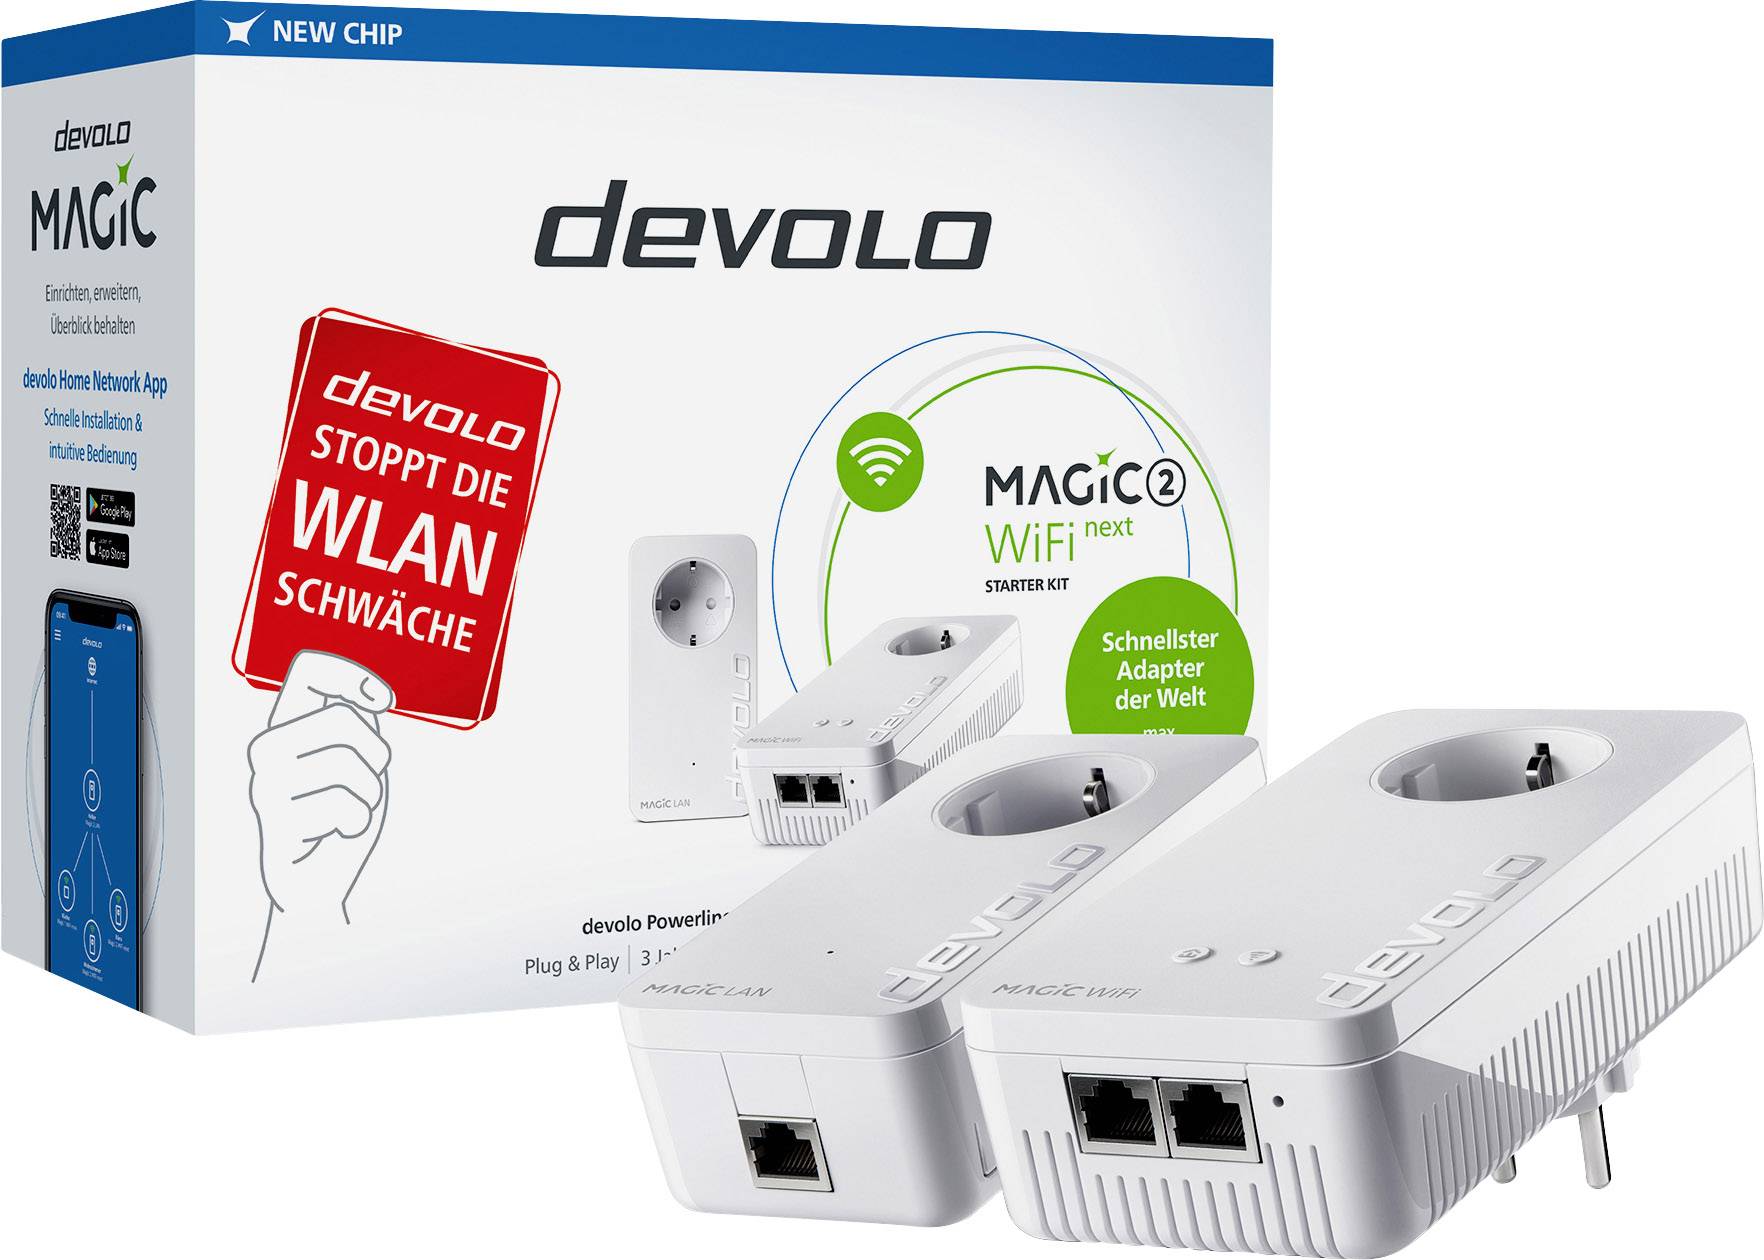 Devolo Magic 2 WiFi next Starter Kit Powerline Wi-Fi starter kit 8614 DE,  AT Powerline, Wi-Fi 2400 MBit/s